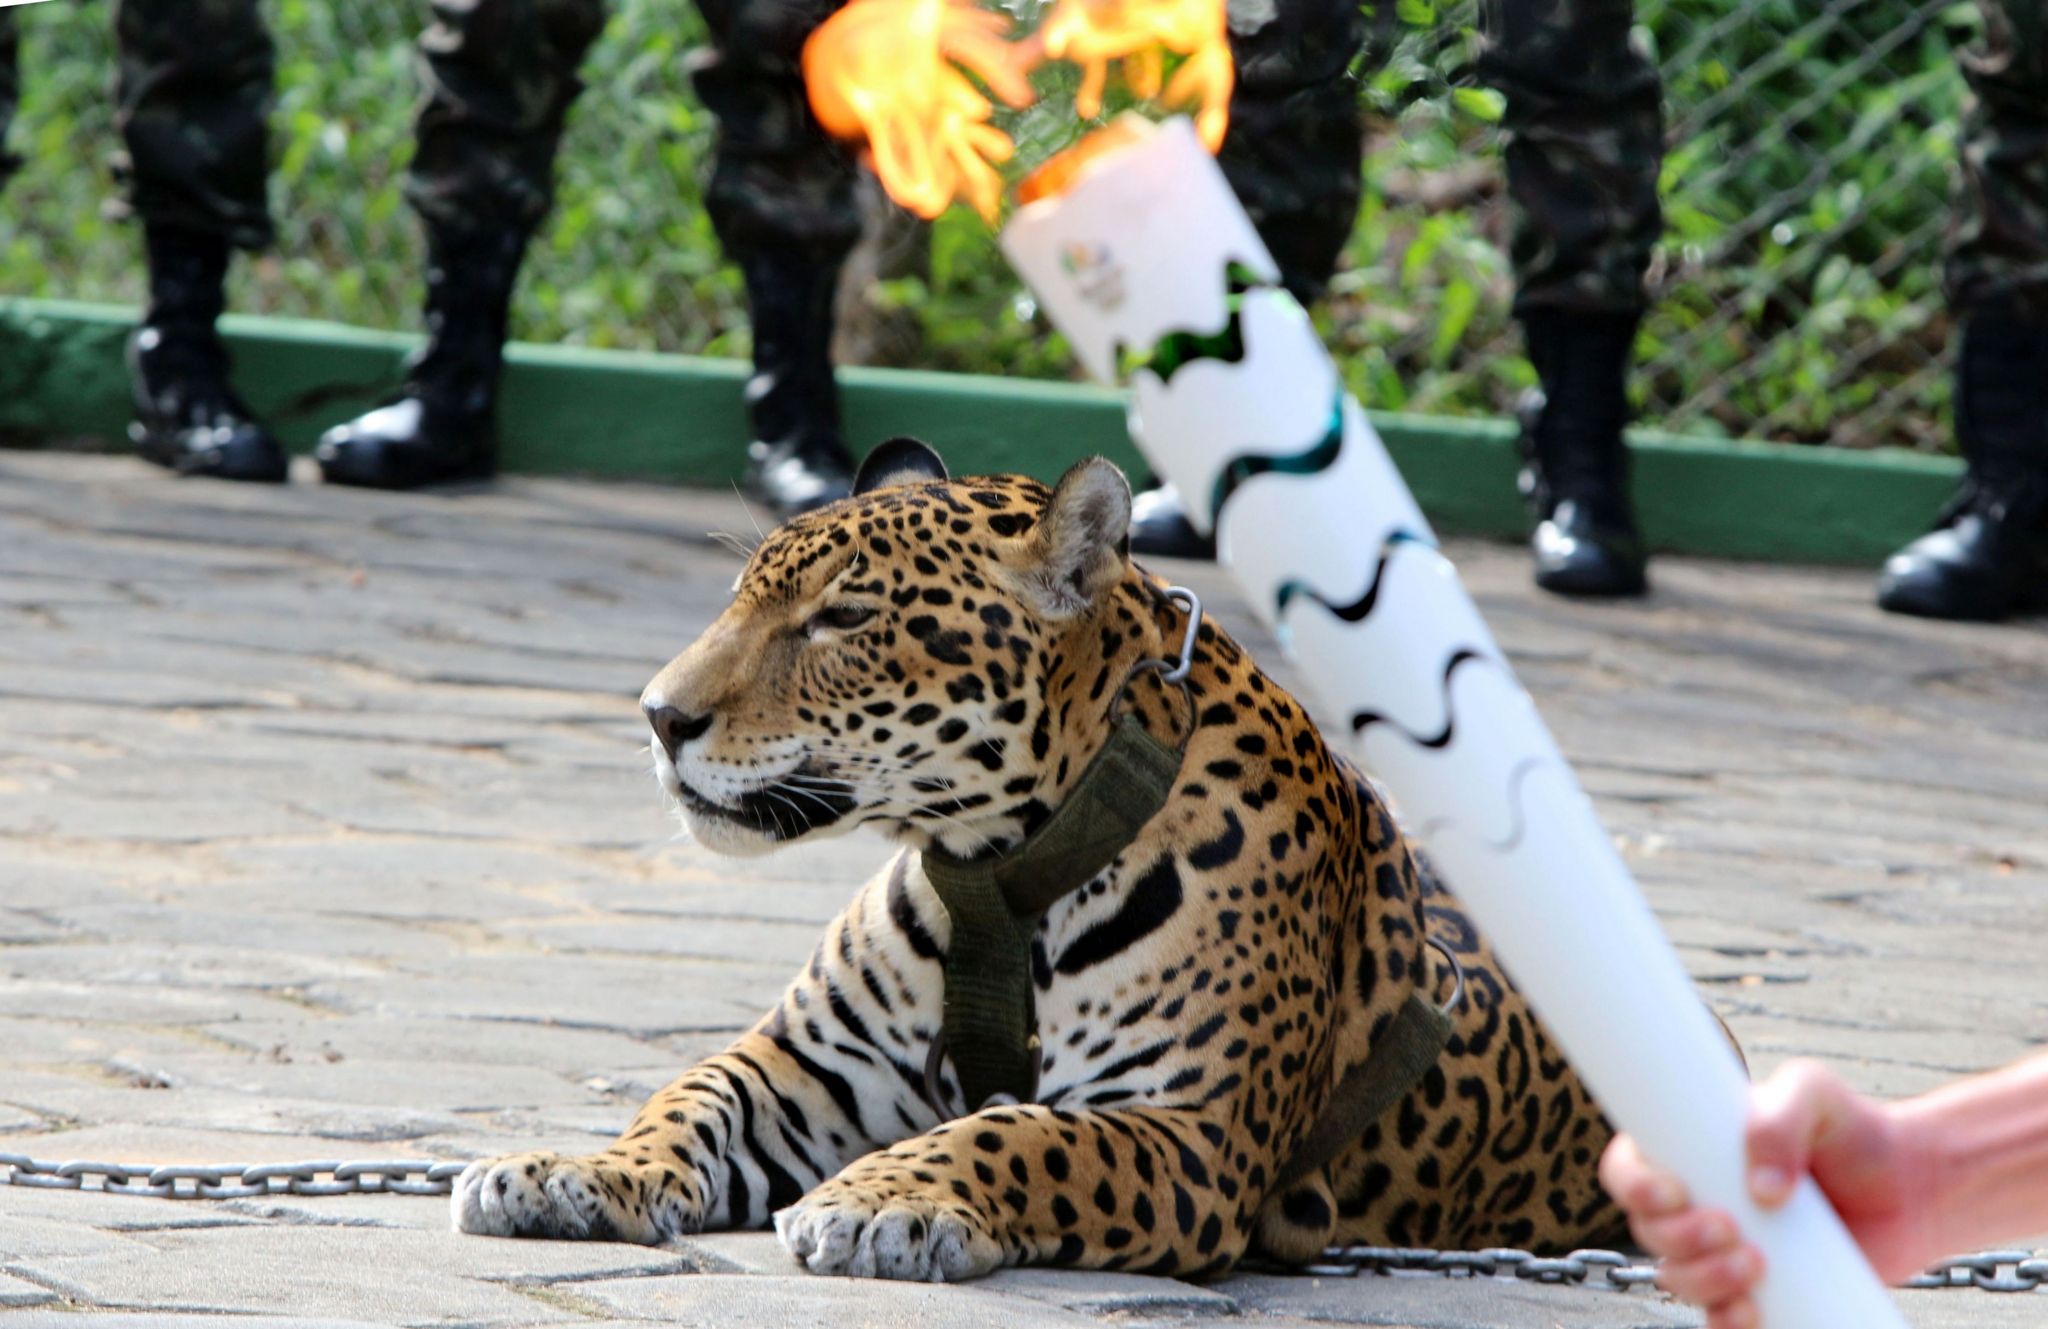 Rio 2016: Jaguar in Amazon torch relay shot dead - BBC News